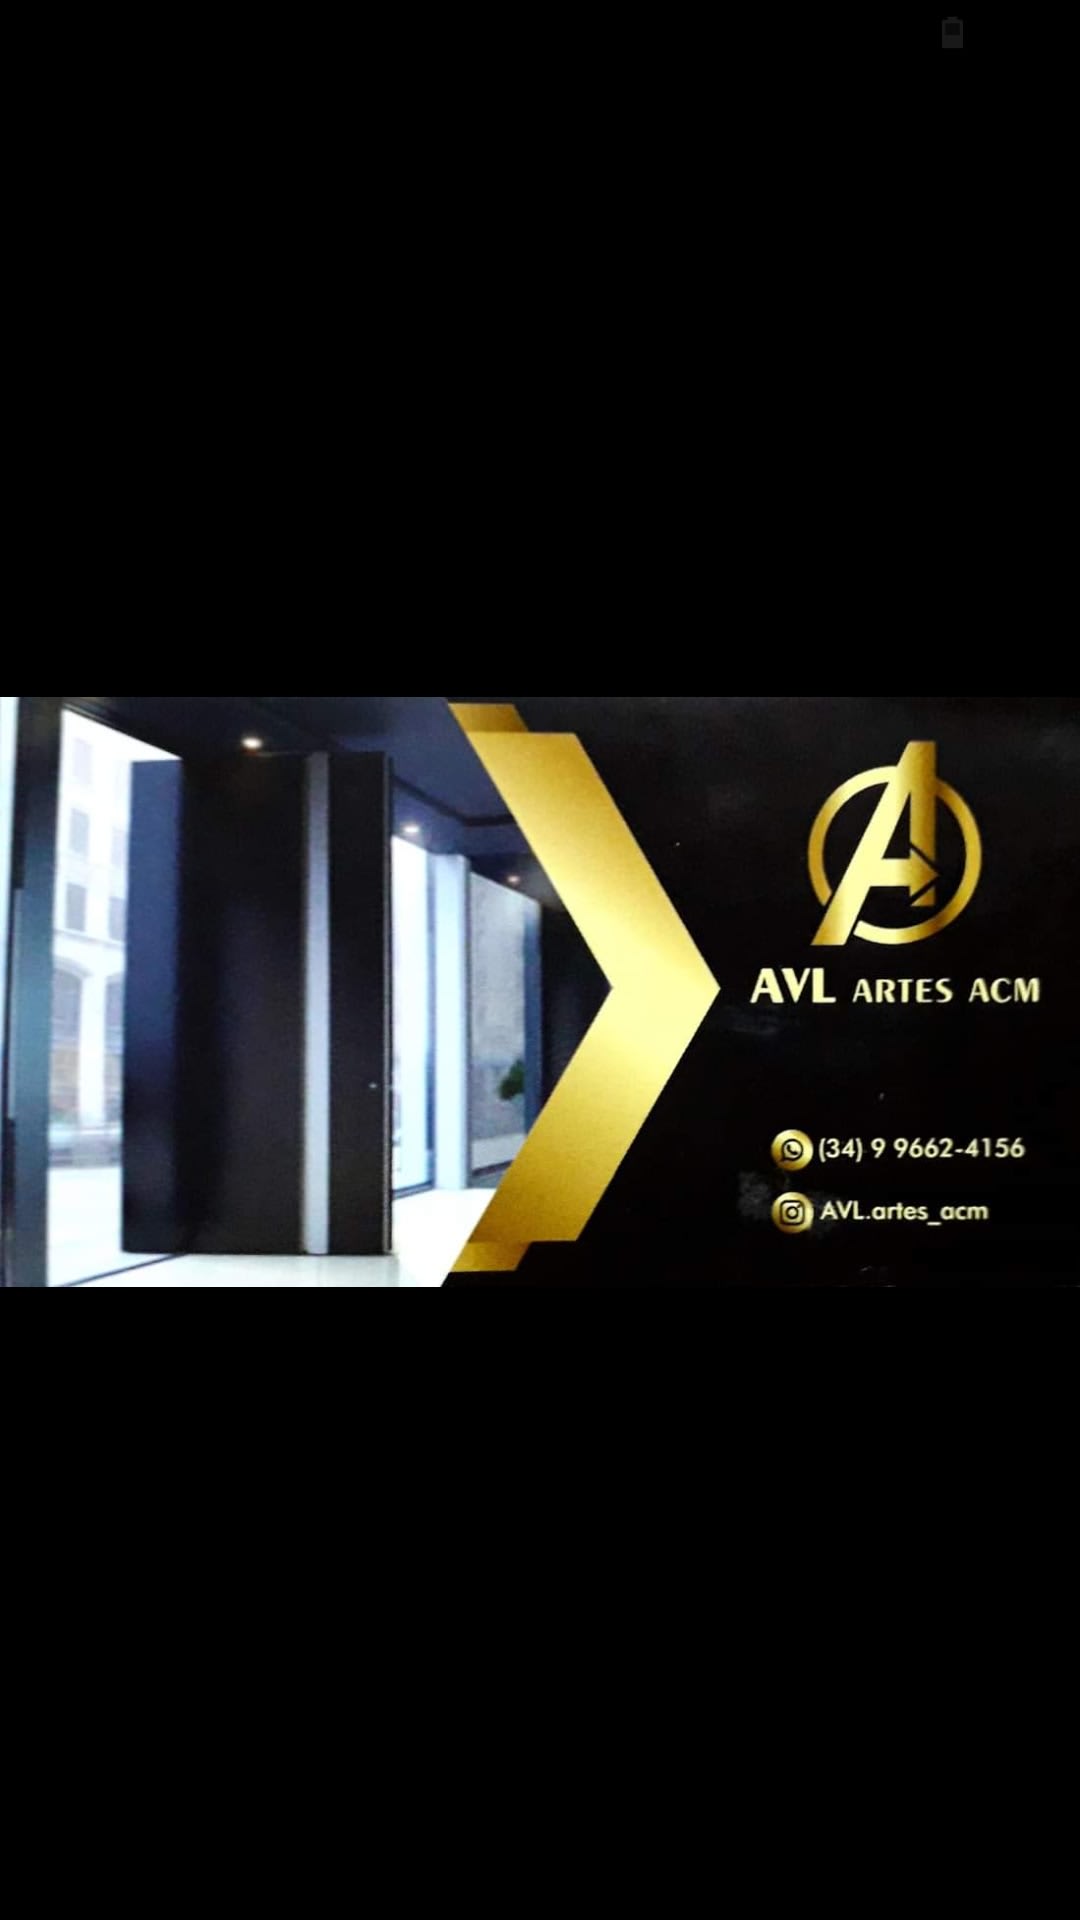 AVL Artes ACM